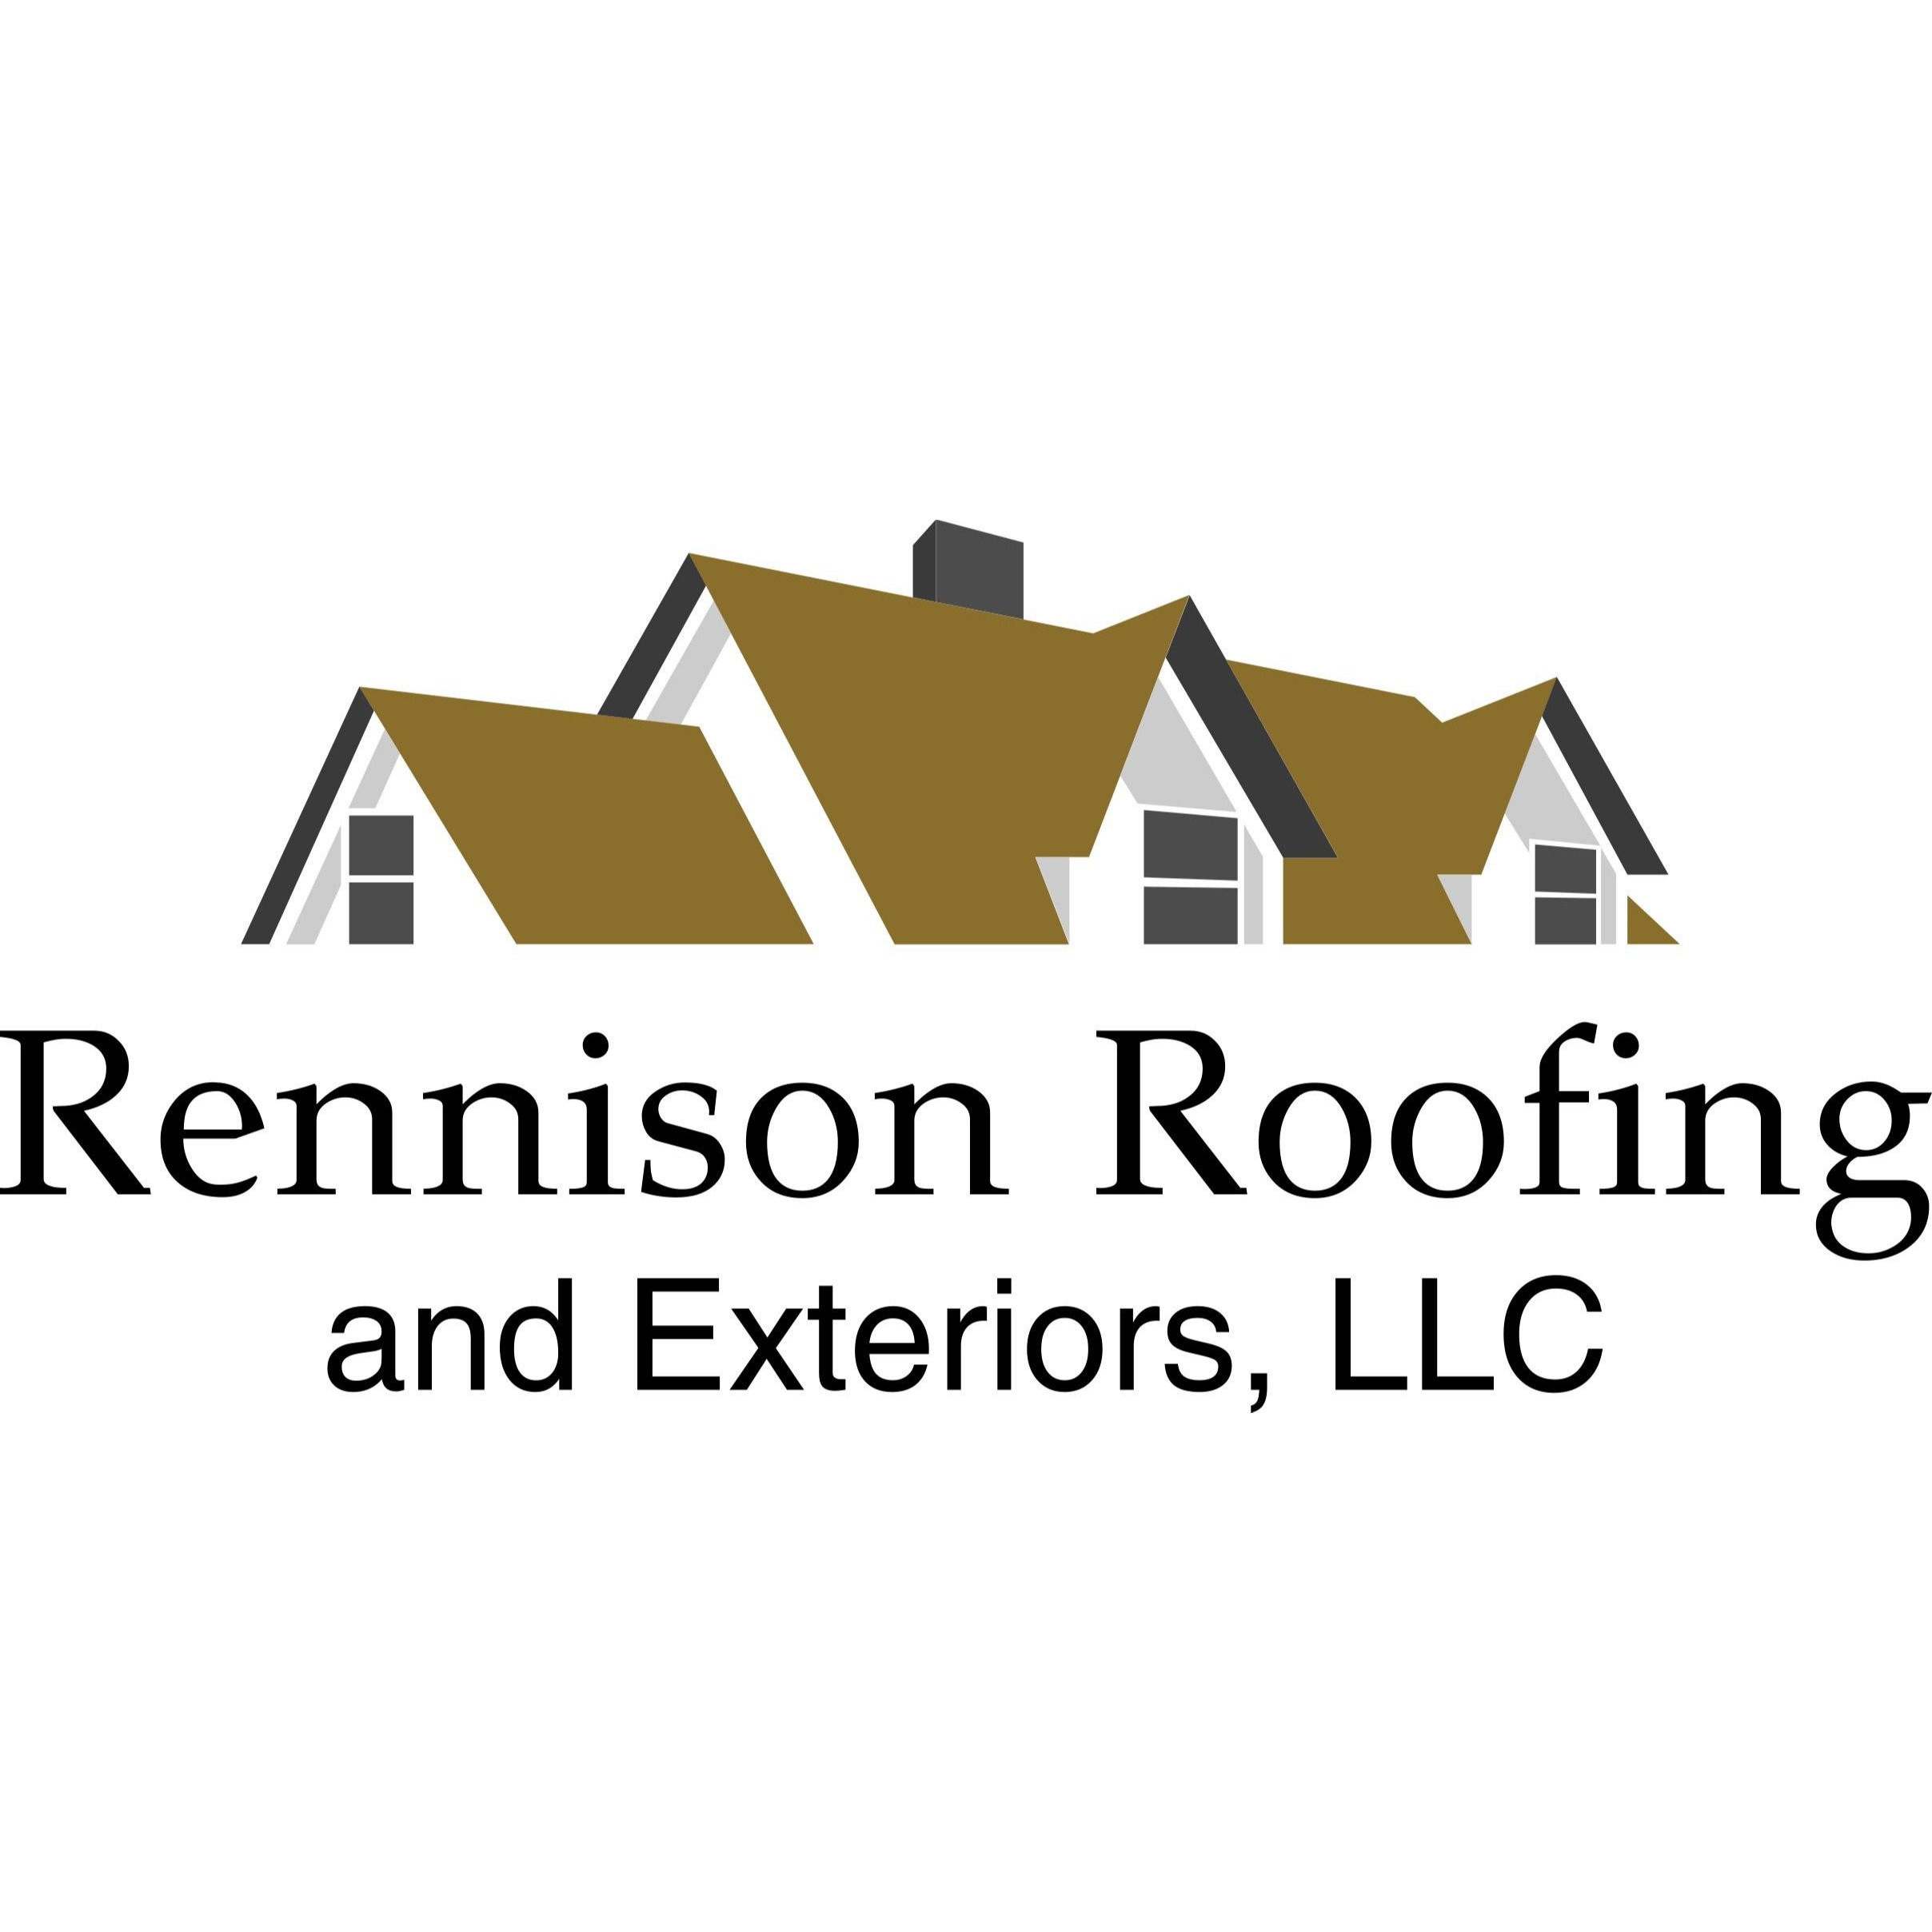 Rennison Roofing & Exteriors, LLC Logo